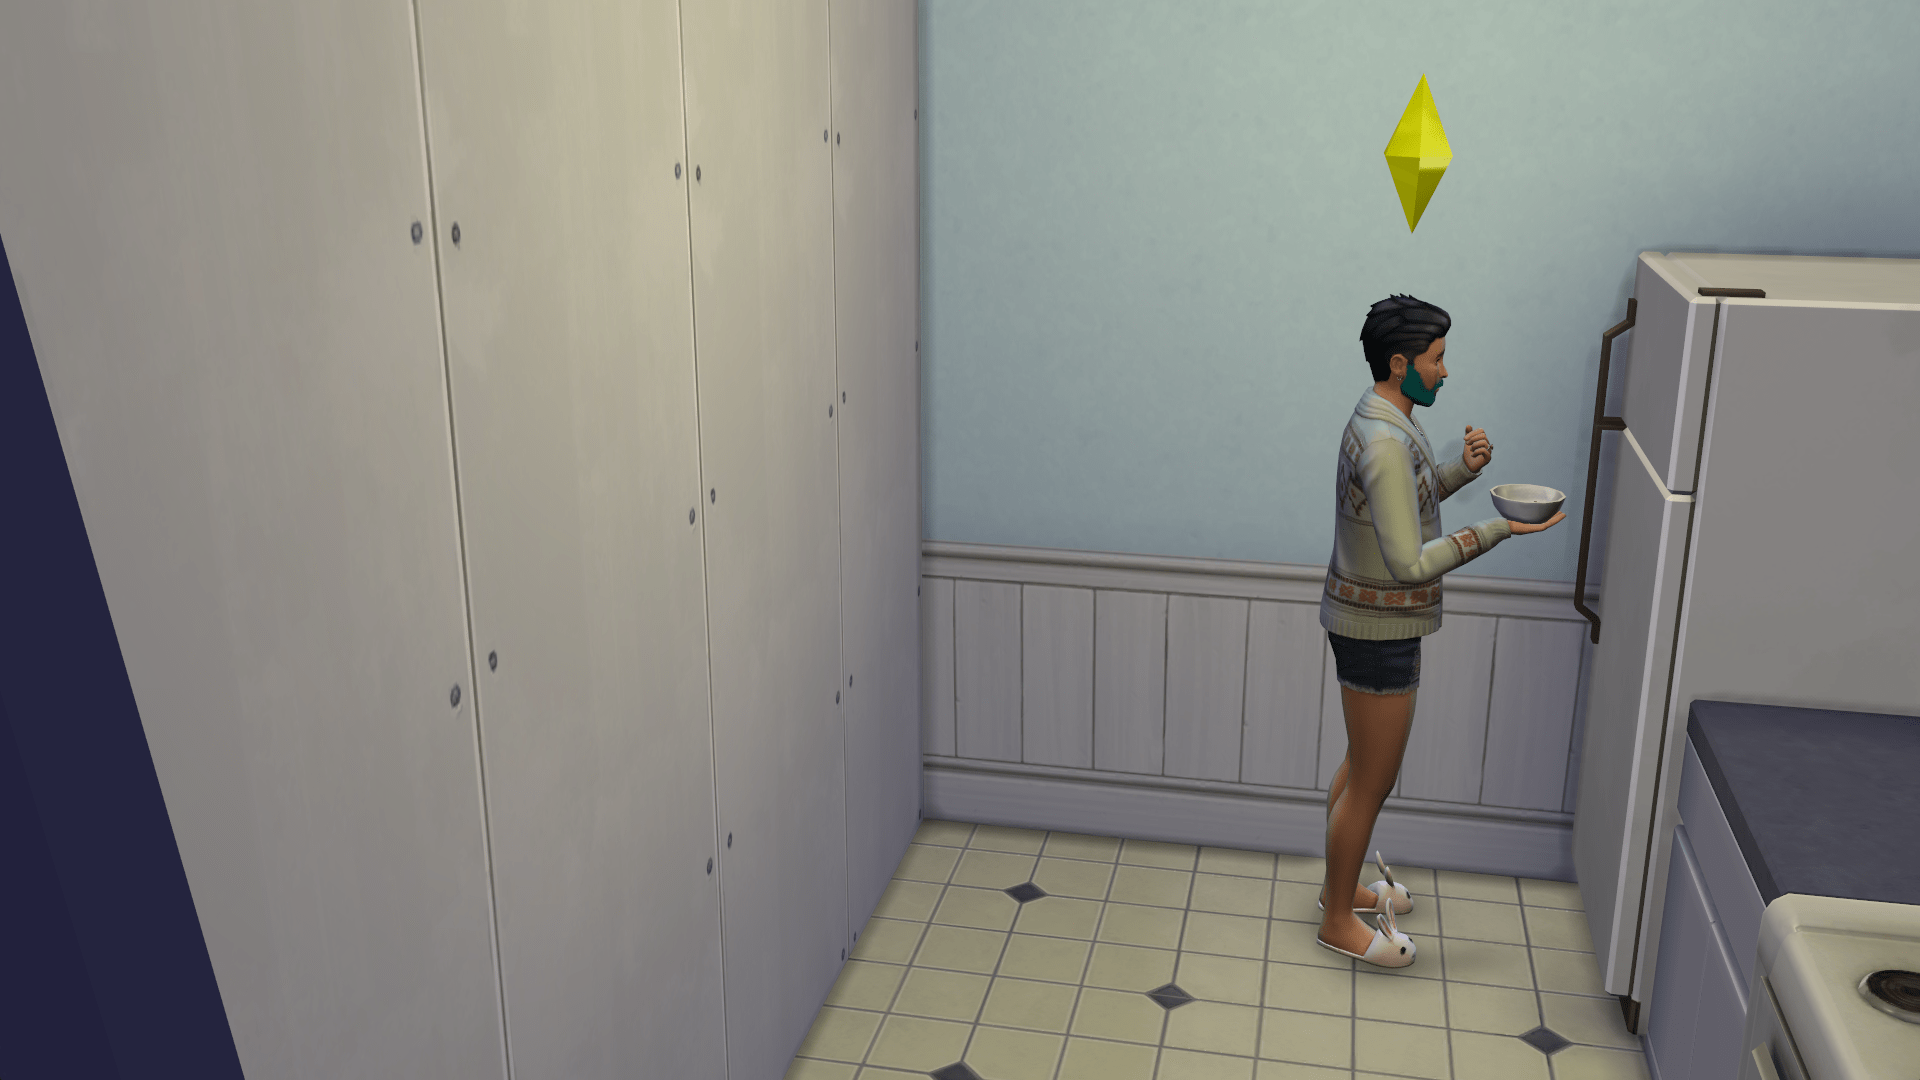 The Most Helpful Sims 4 Cheats (So Far)